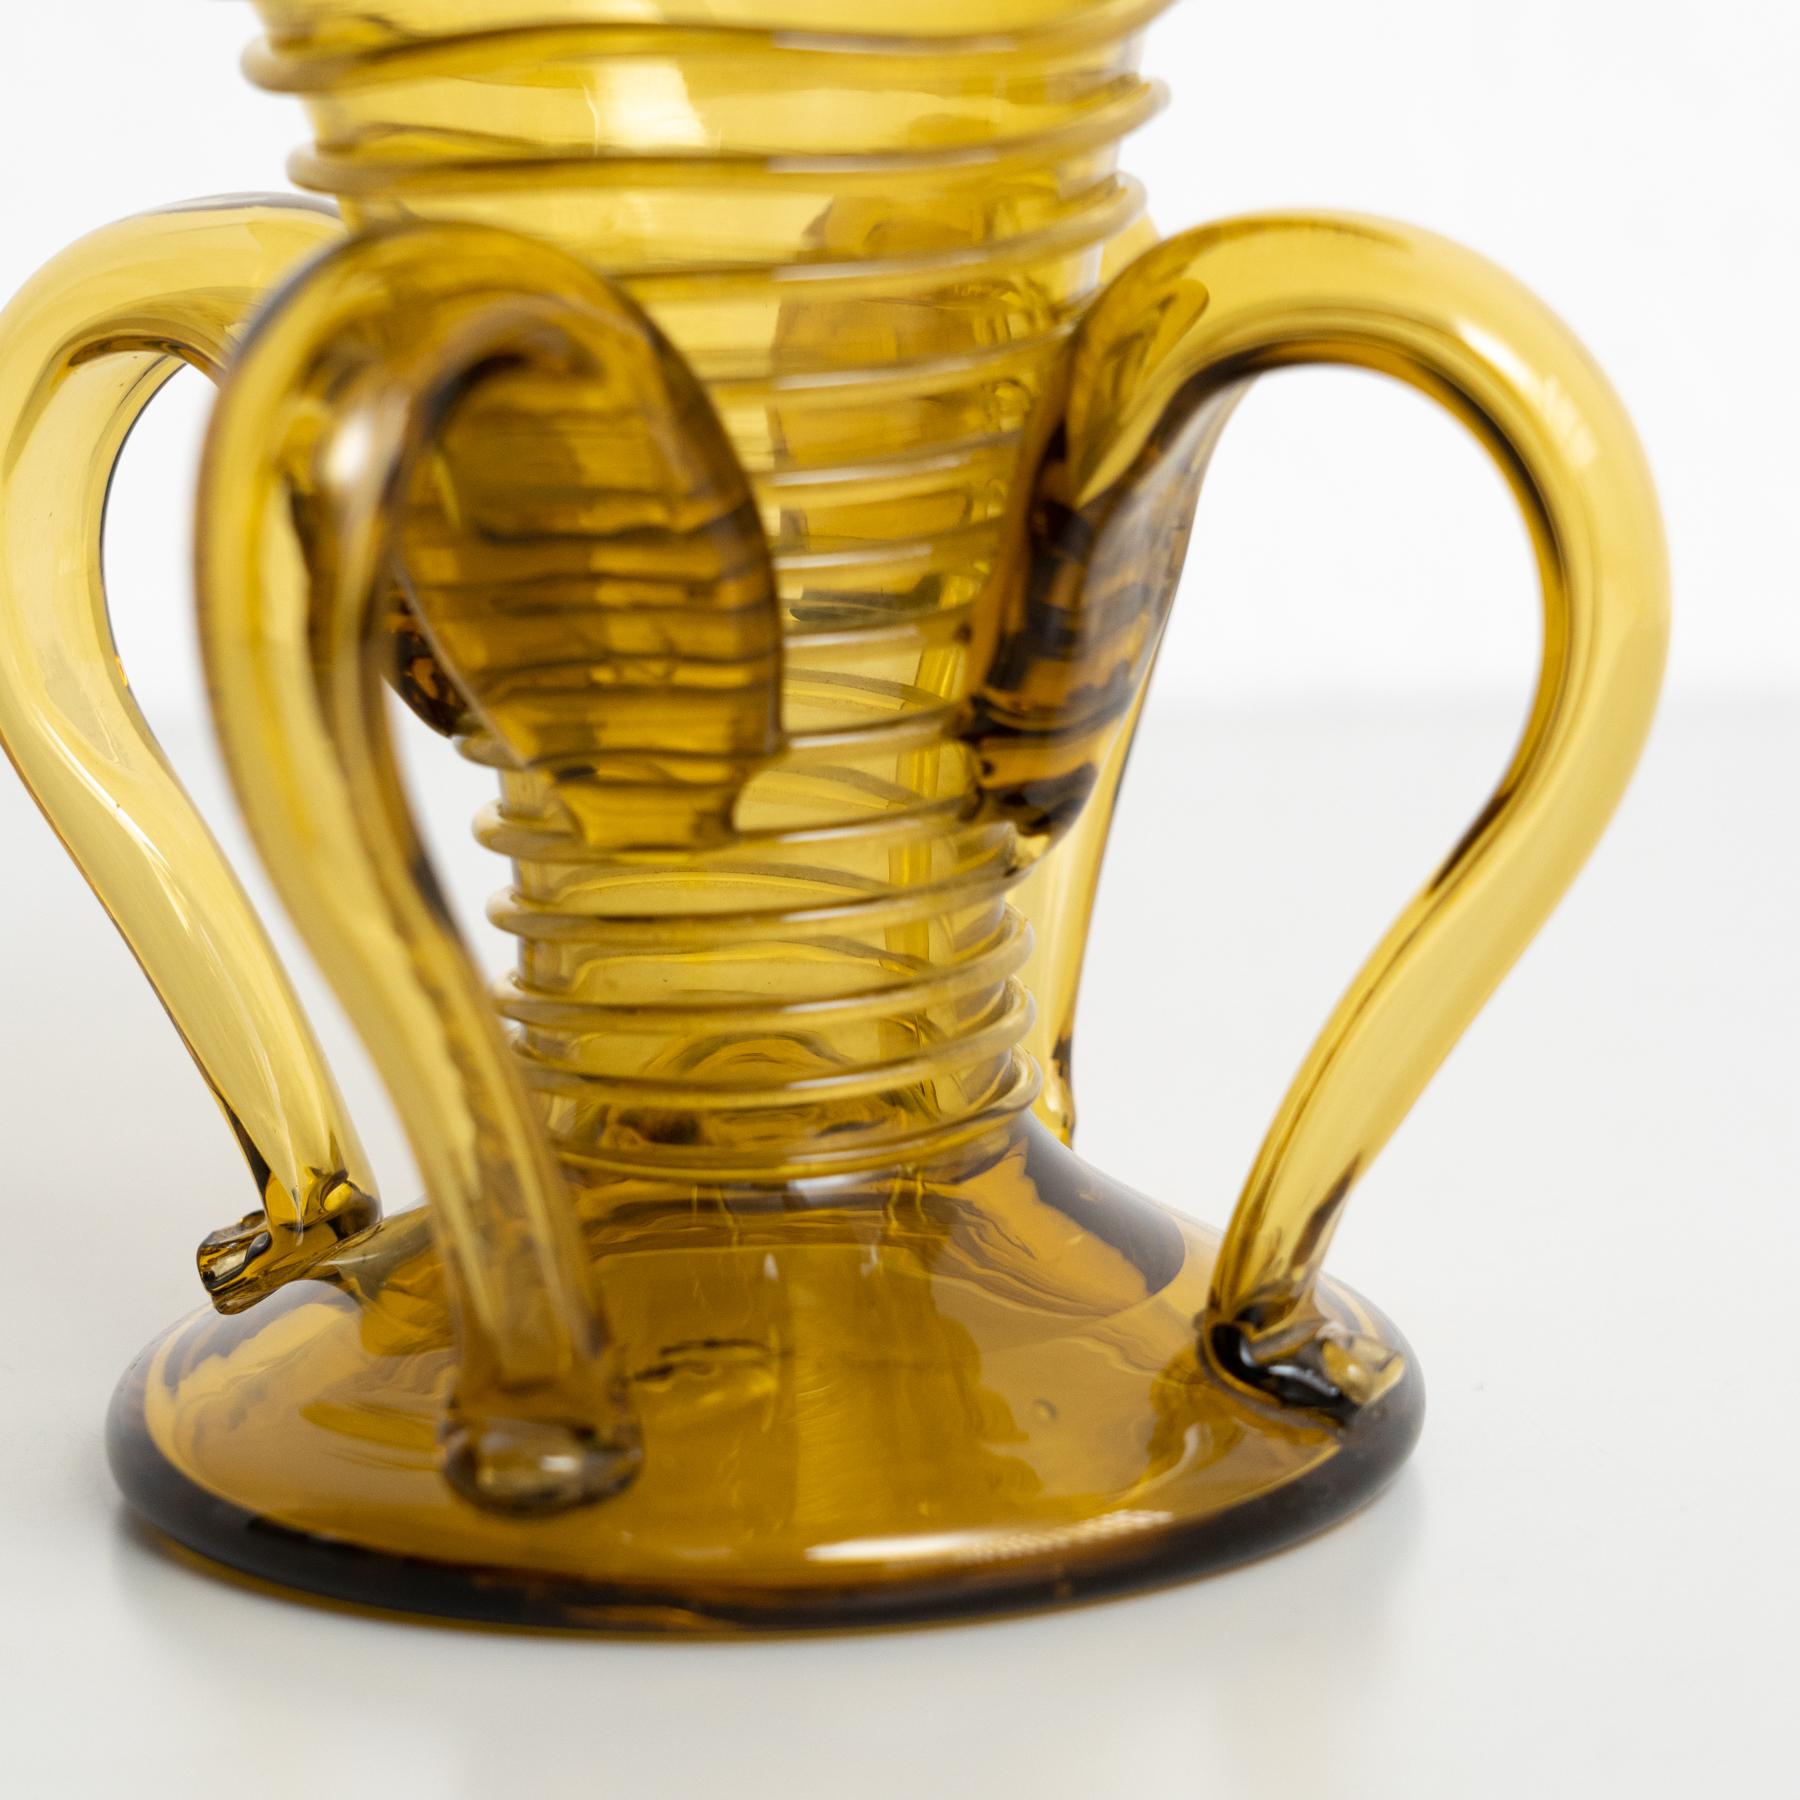 Elegant Amber Blown Glass Vase - Early 20th Century Spanish Artistry For Sale 5